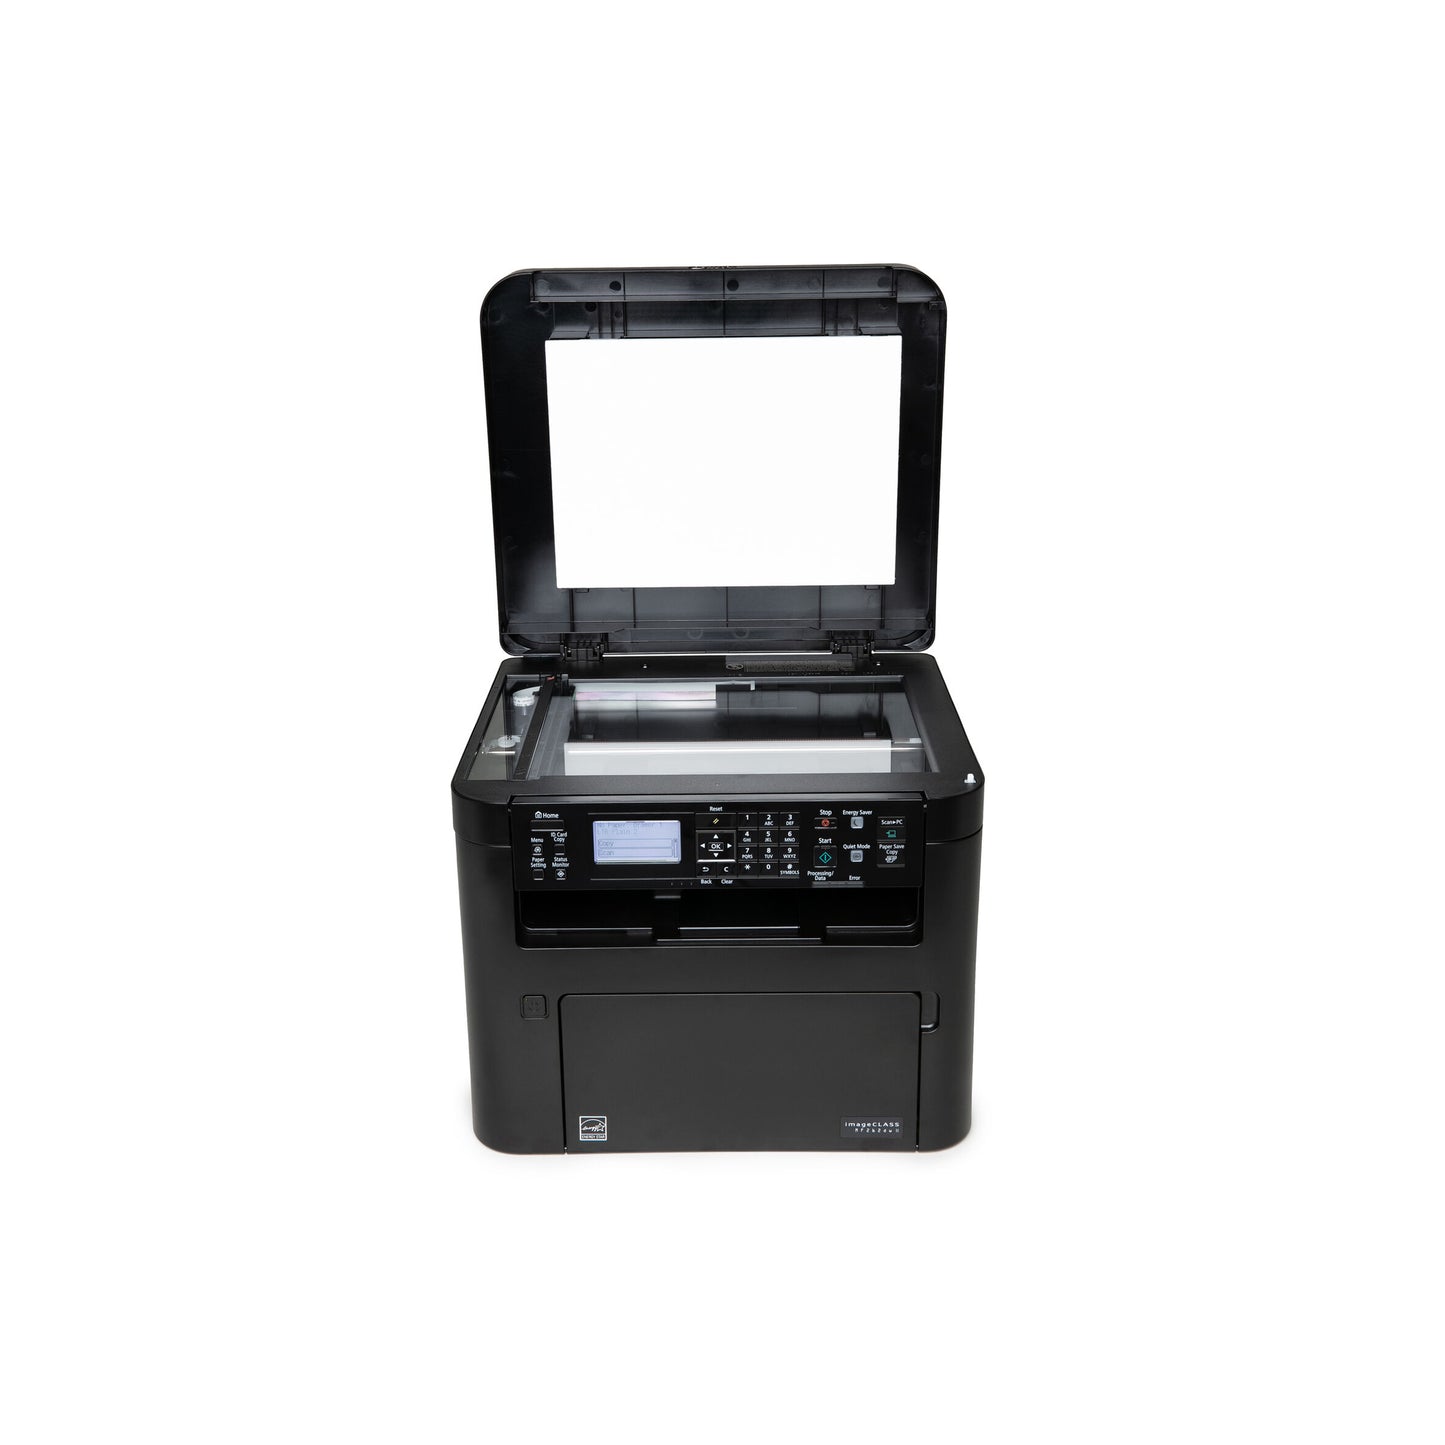 Canon imageCLASS MF262dw II - طابعة ليزر أحادية اللون لاسلكية مع الطباعة والنسخ والمسح الضوئي، أسود